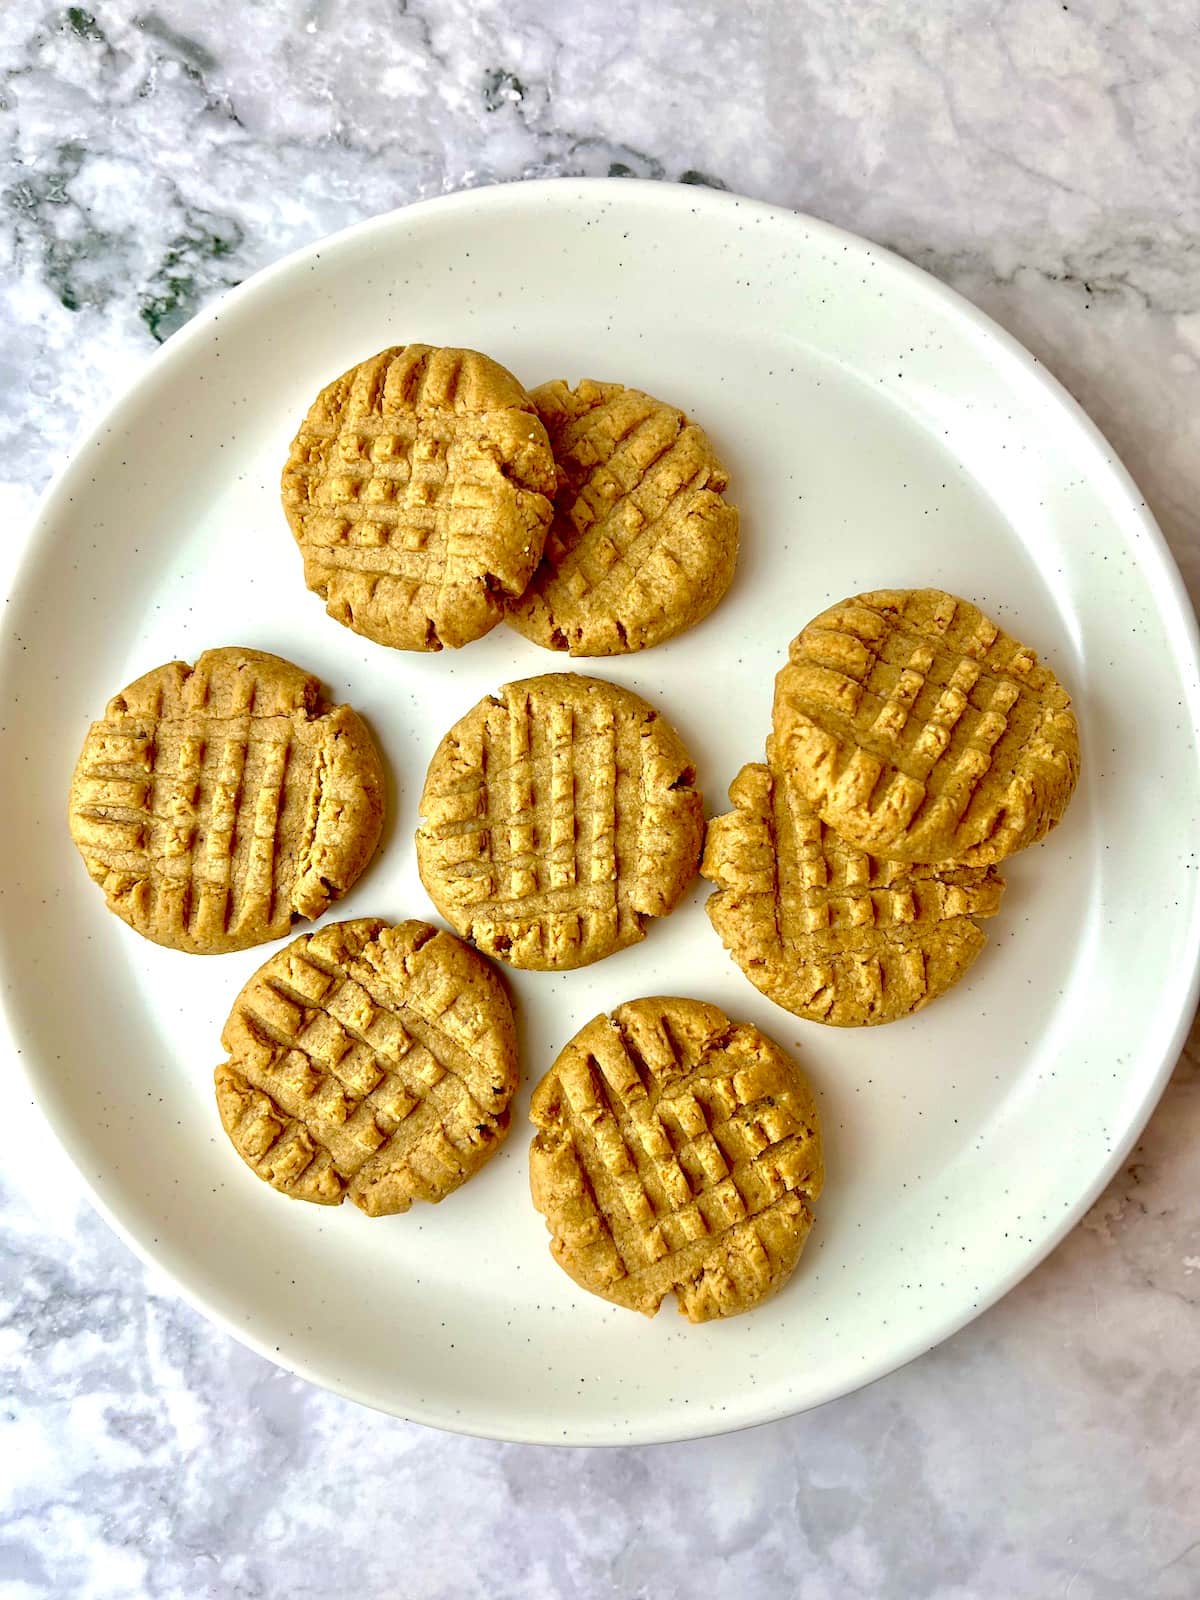 Vegan peanut butter cookies on a plate.